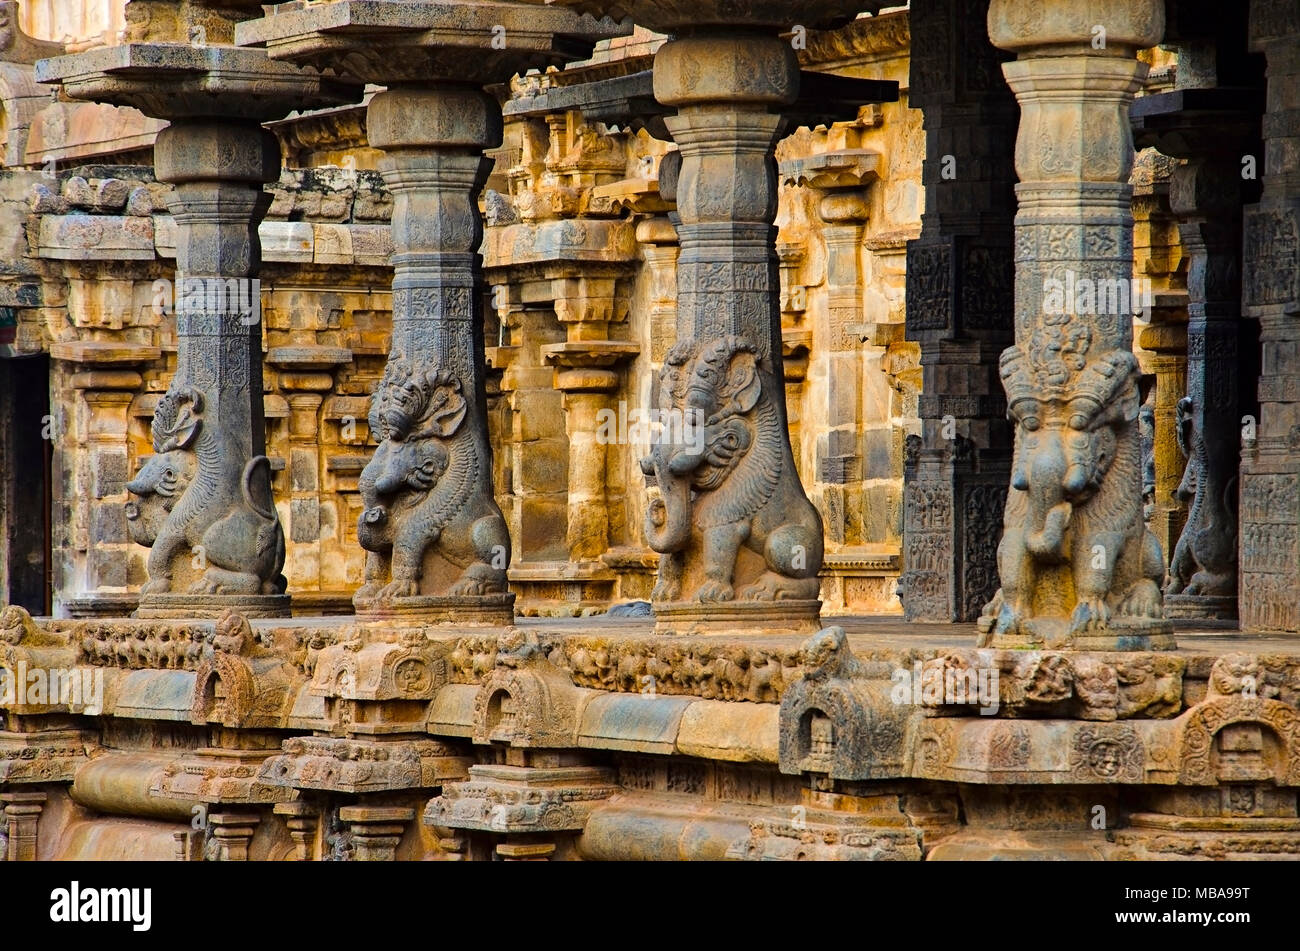 Idoli scolpiti sulla parete interna del Tempio Airavatesvara, Darasuram, nei pressi di Kumbakonam, Tamil Nadu, India. Hindu Shiva tempio del Tamil architettura, costruito Foto Stock